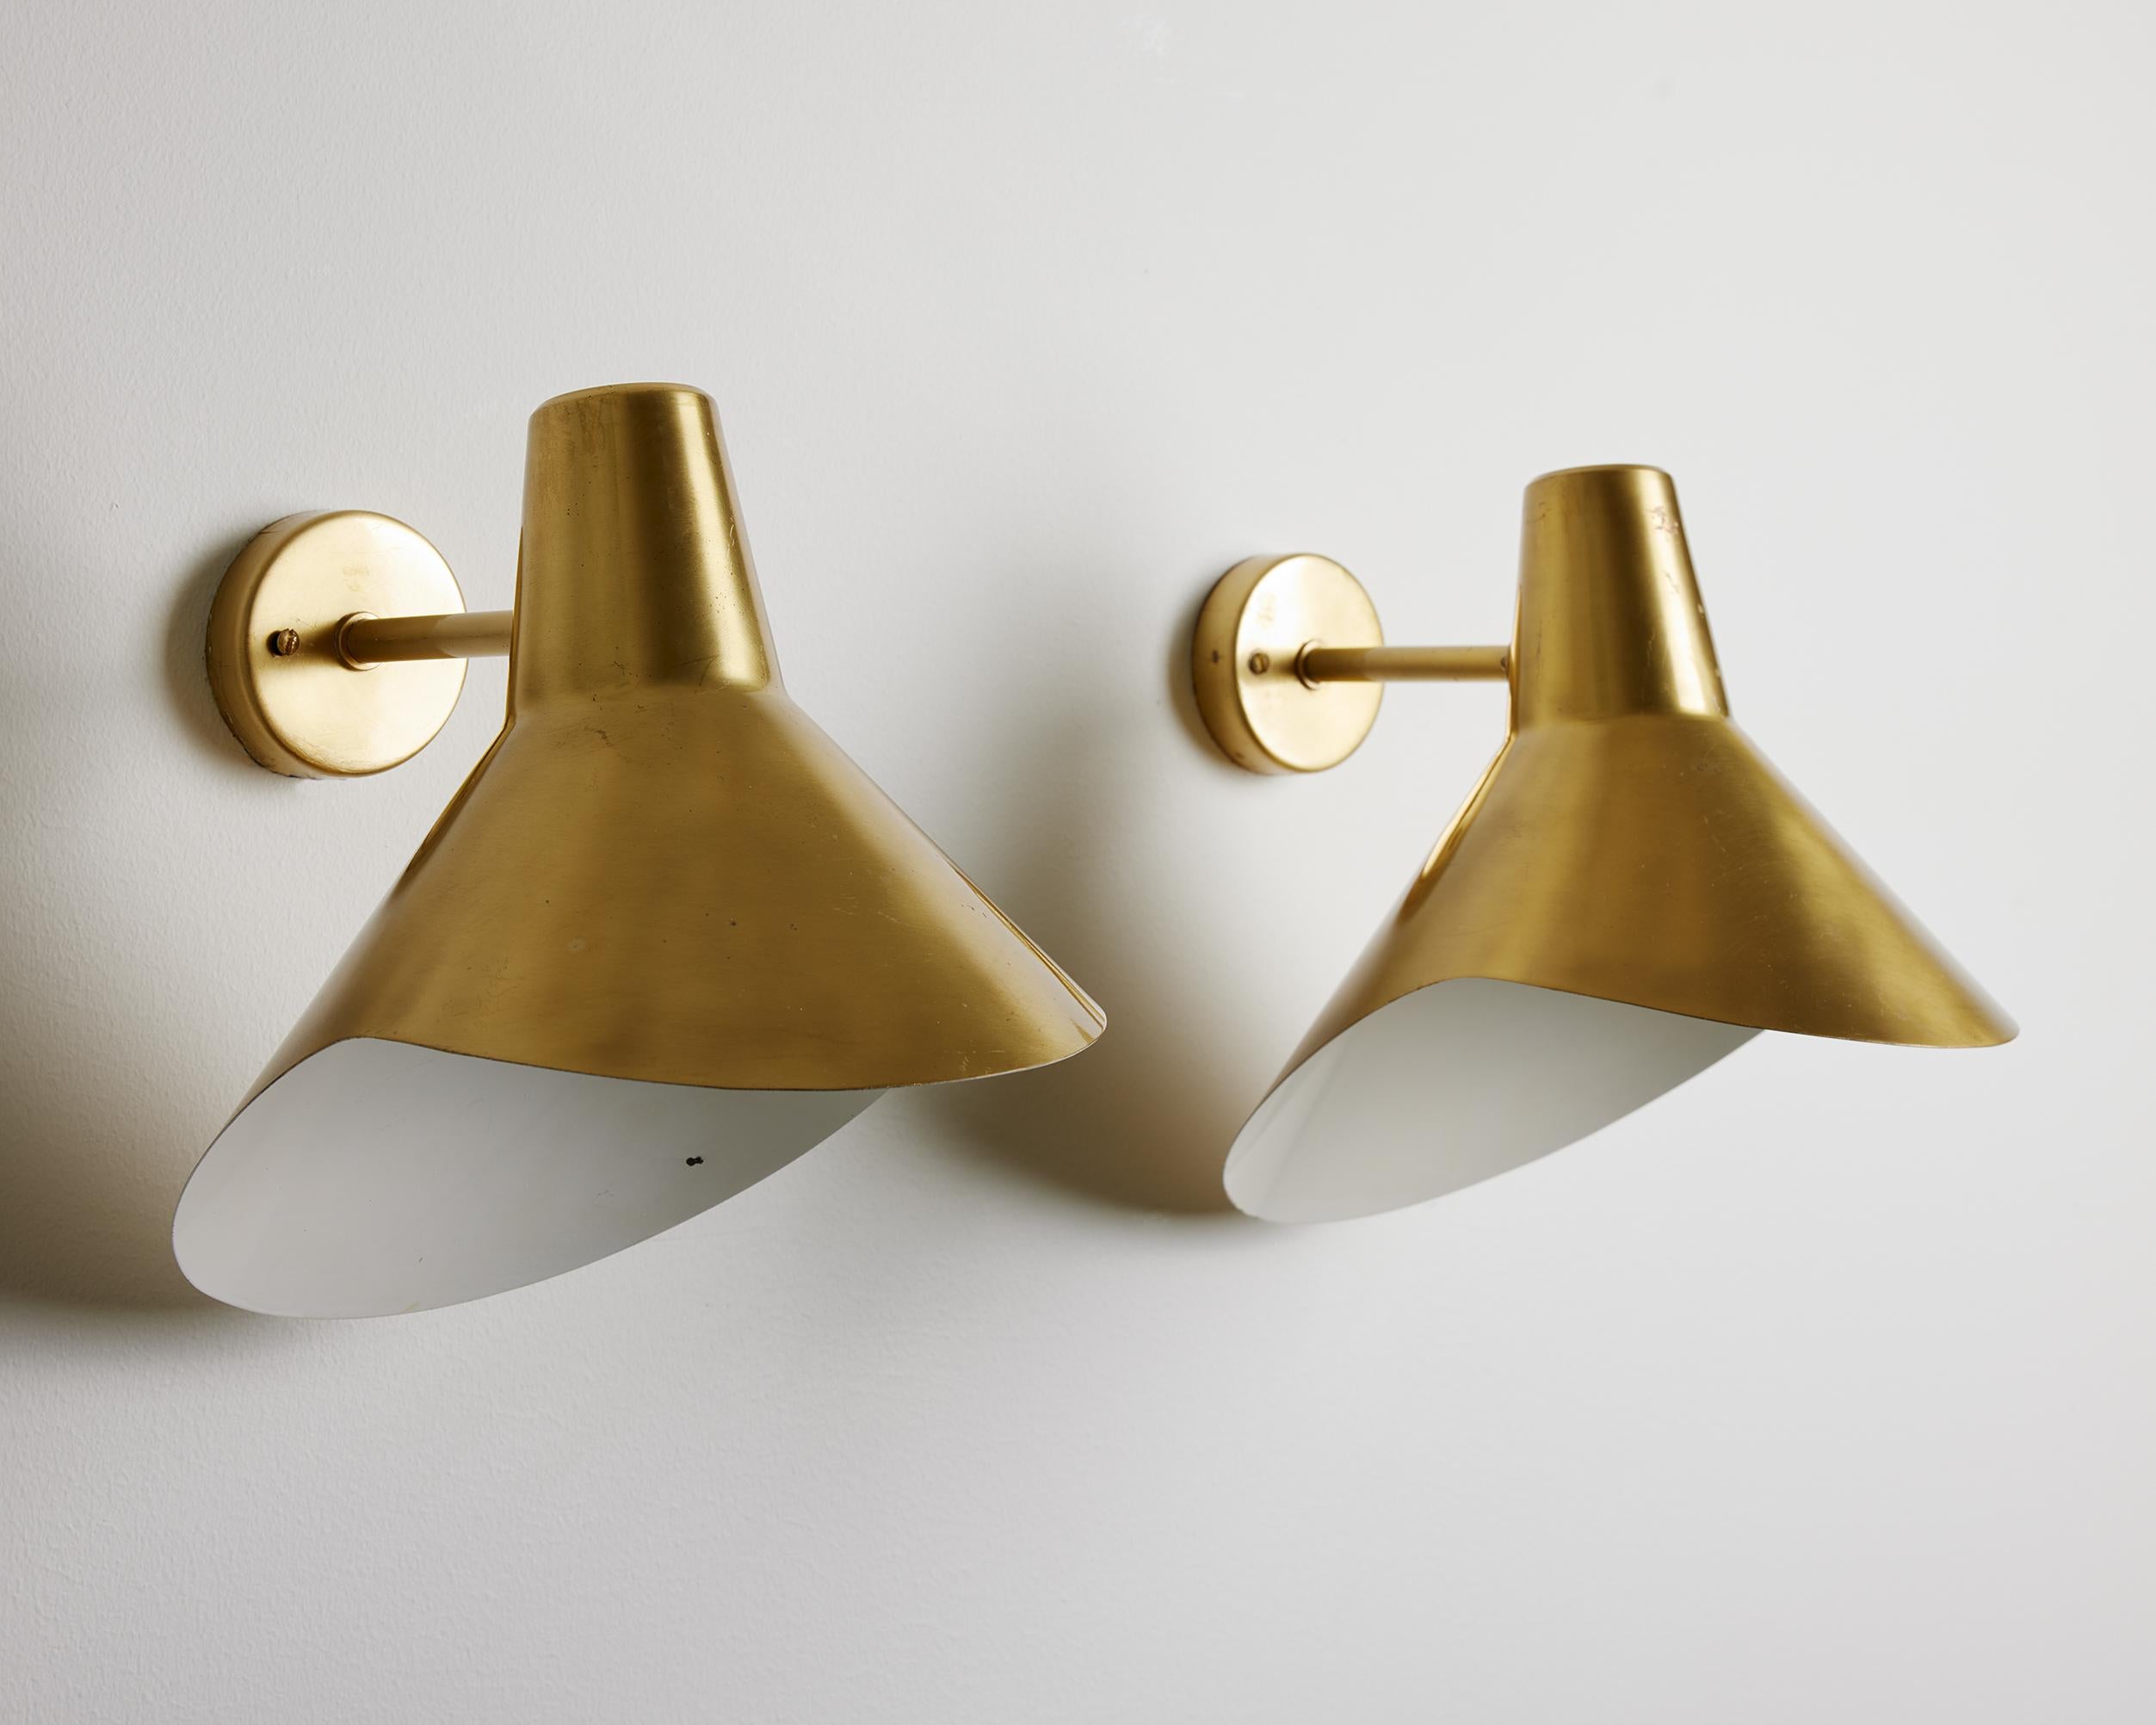 Pair of wall lamps model V319 designed by Hans Bergström for Ateljé Lyktan,
Sweden, 1947.

Brass.

Measurements: 
H: 23 cm
W: 20 cm 
D: 28 cm